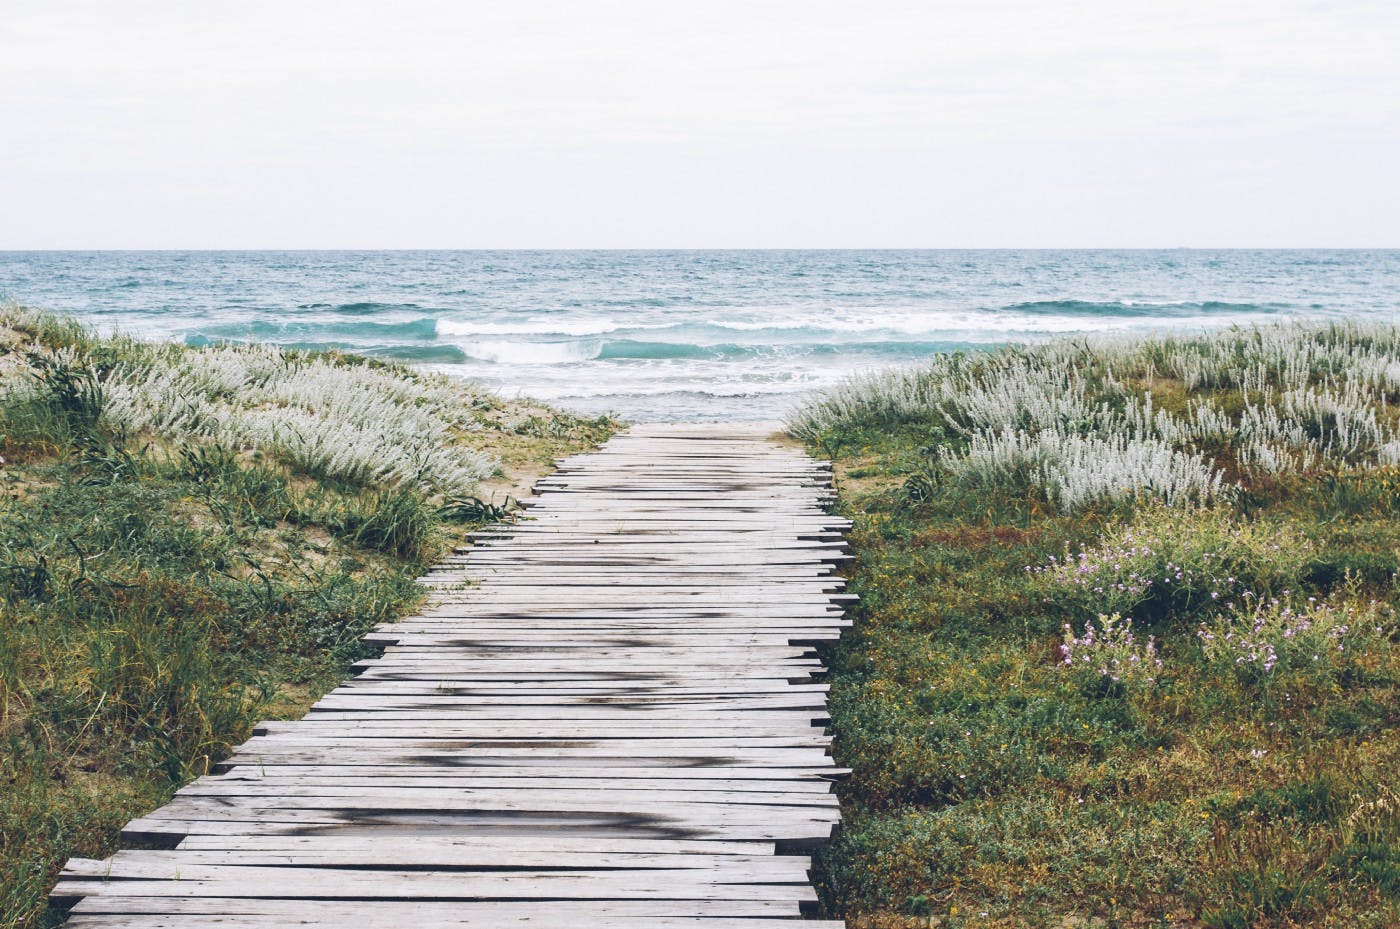 A boardwalk path to the ocean.